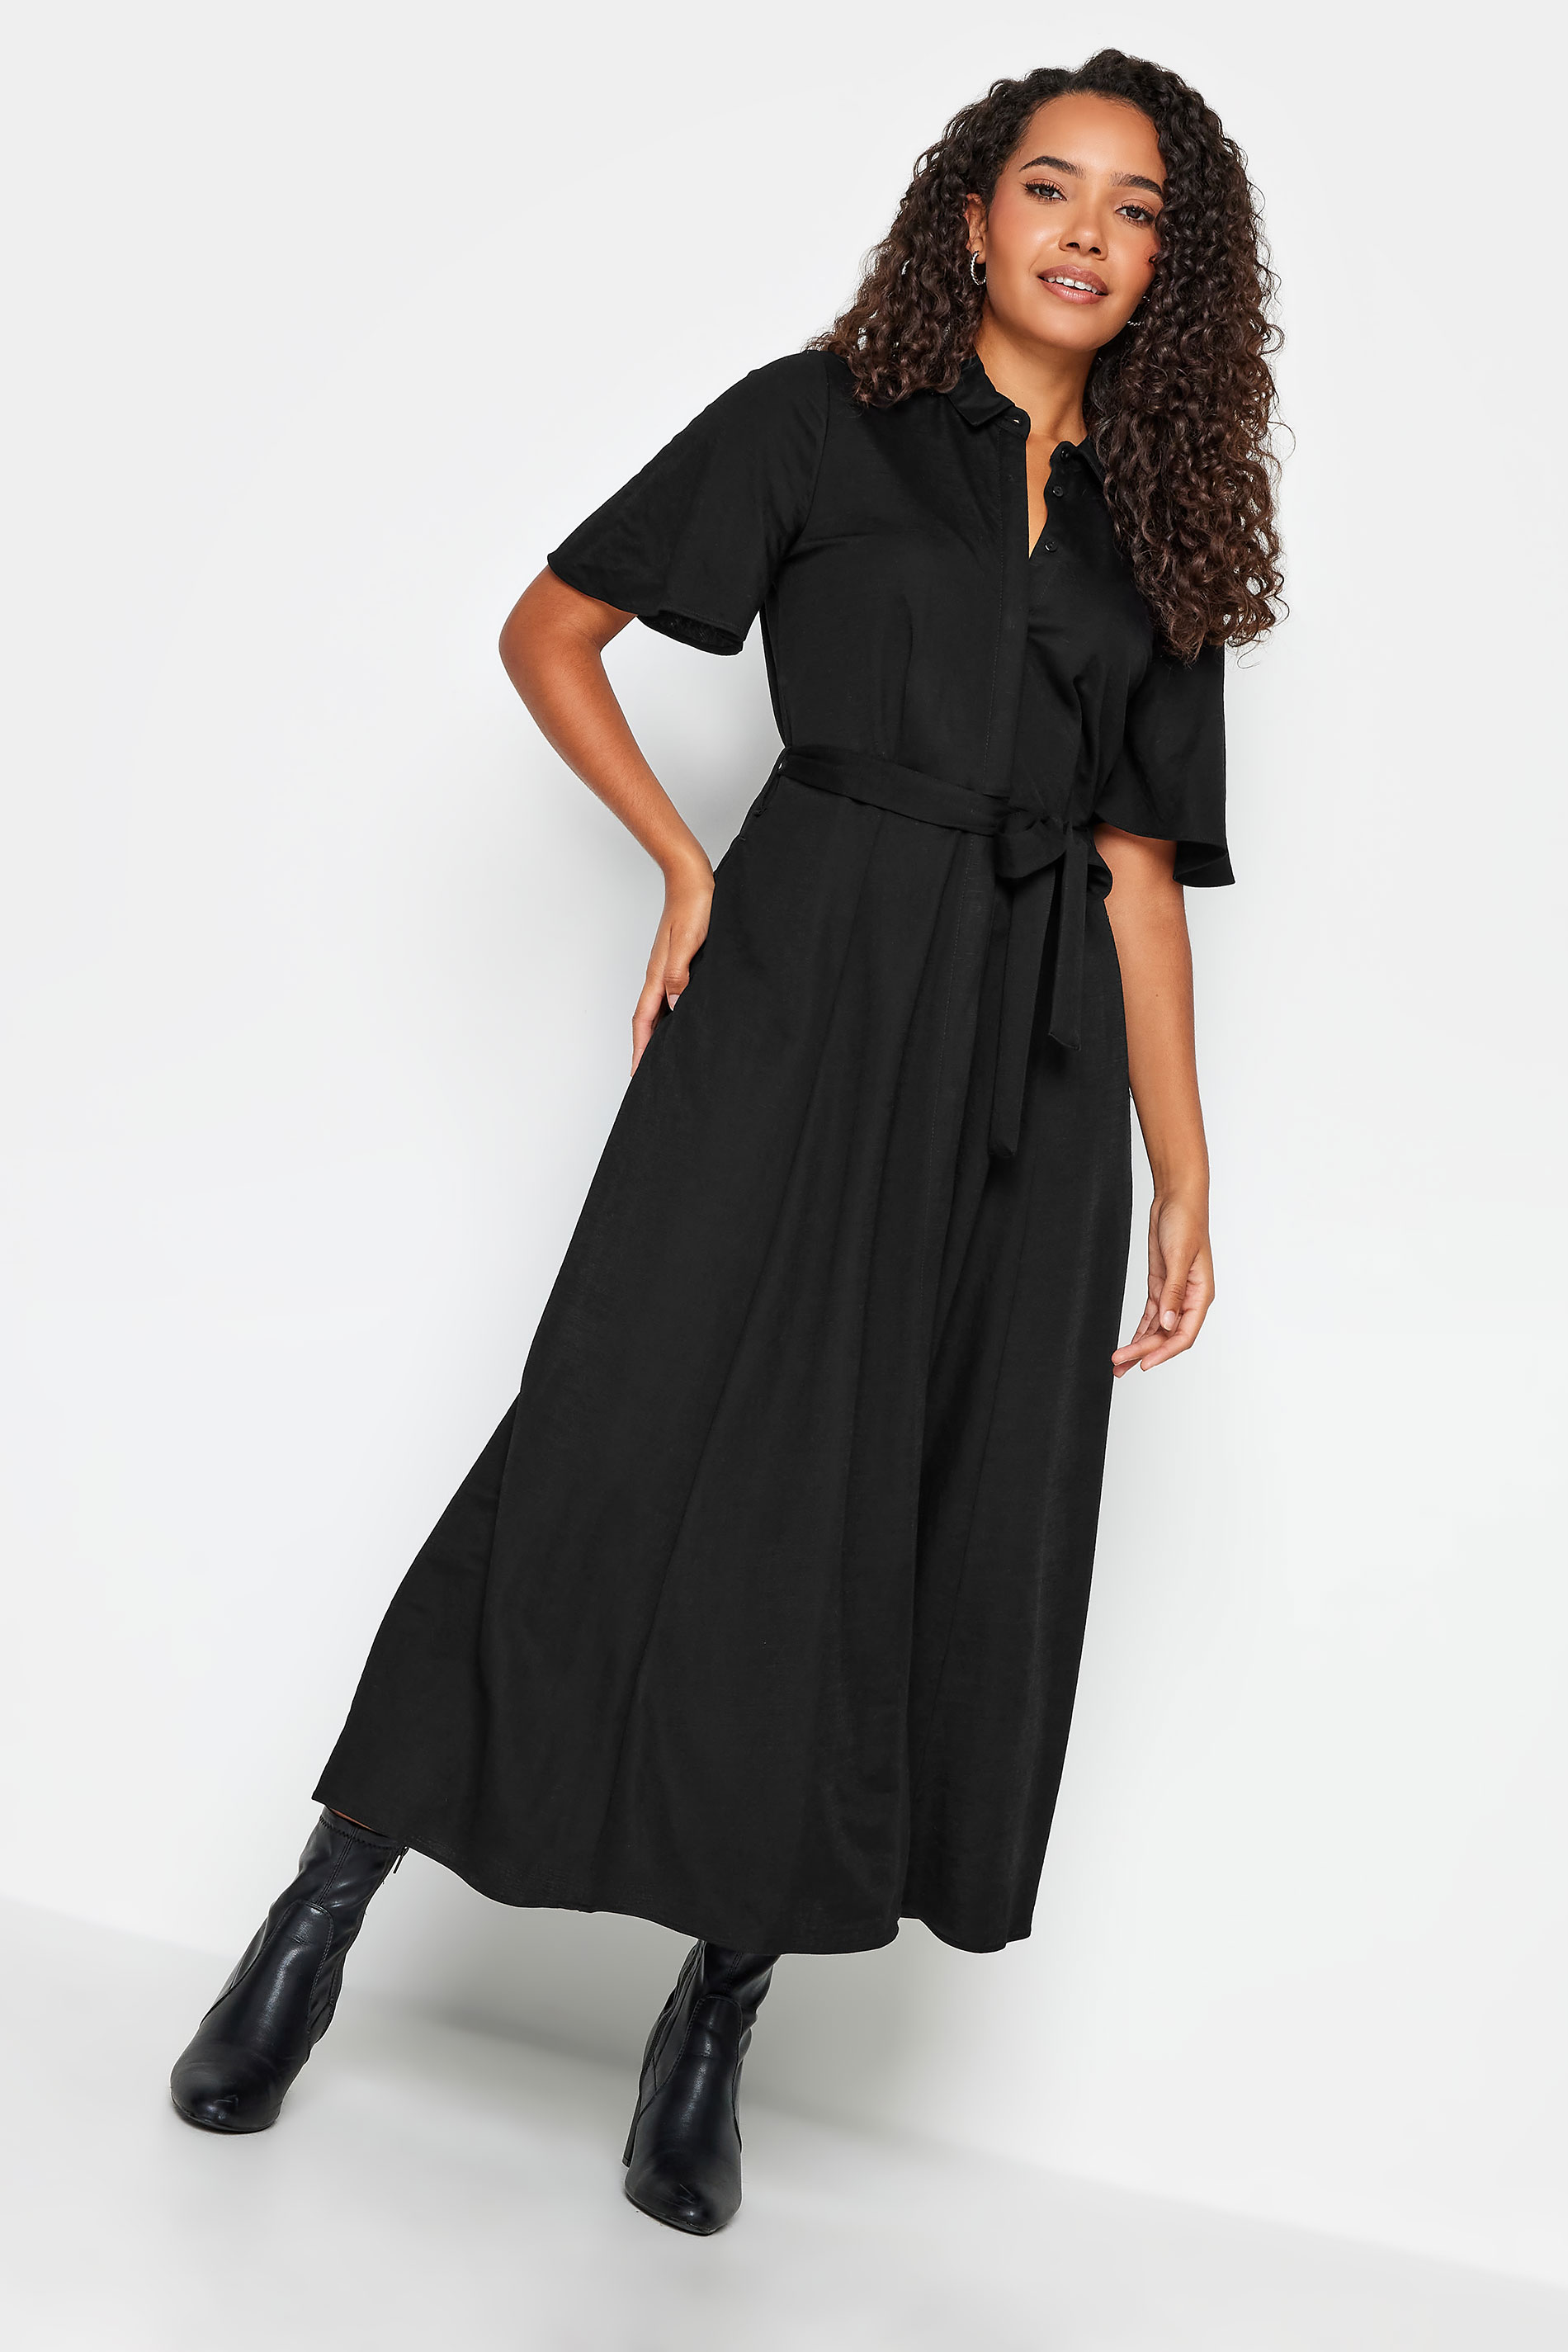 M&Co Black Button Through Collared Midaxi Dress | M&Co 2